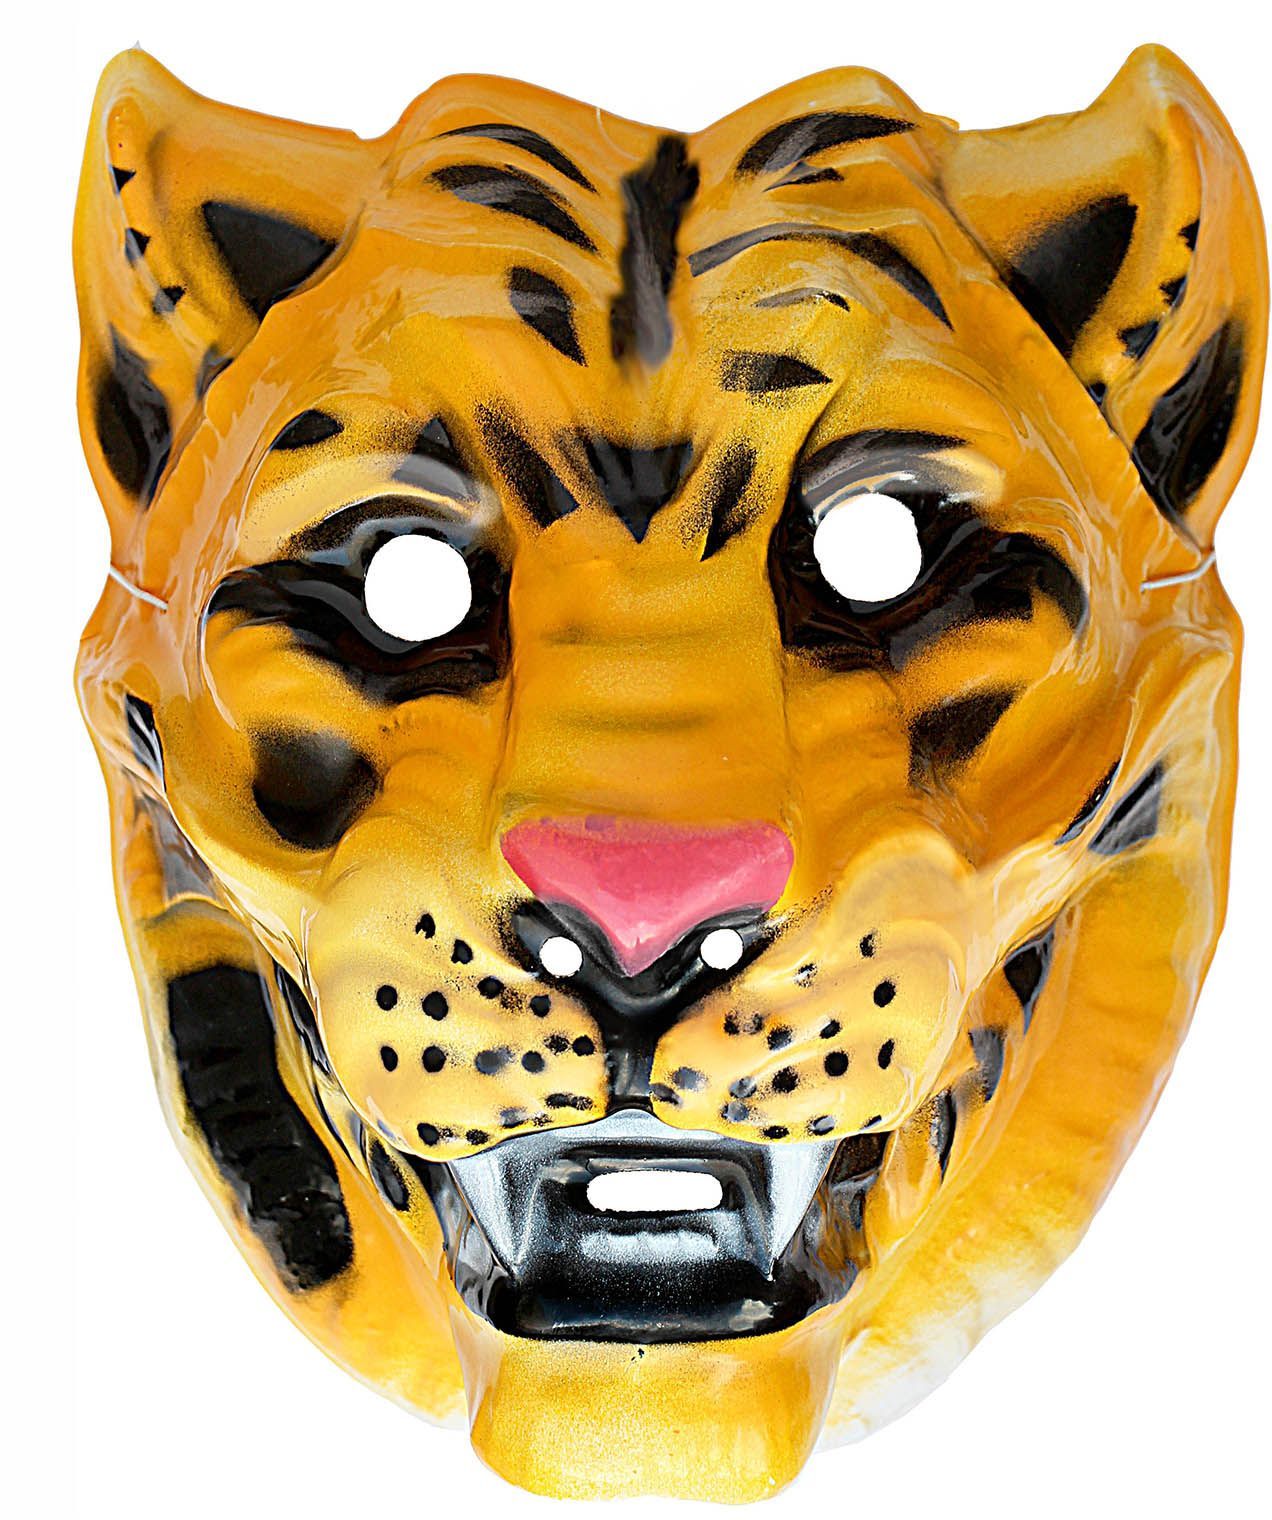 Plastic tijger masker